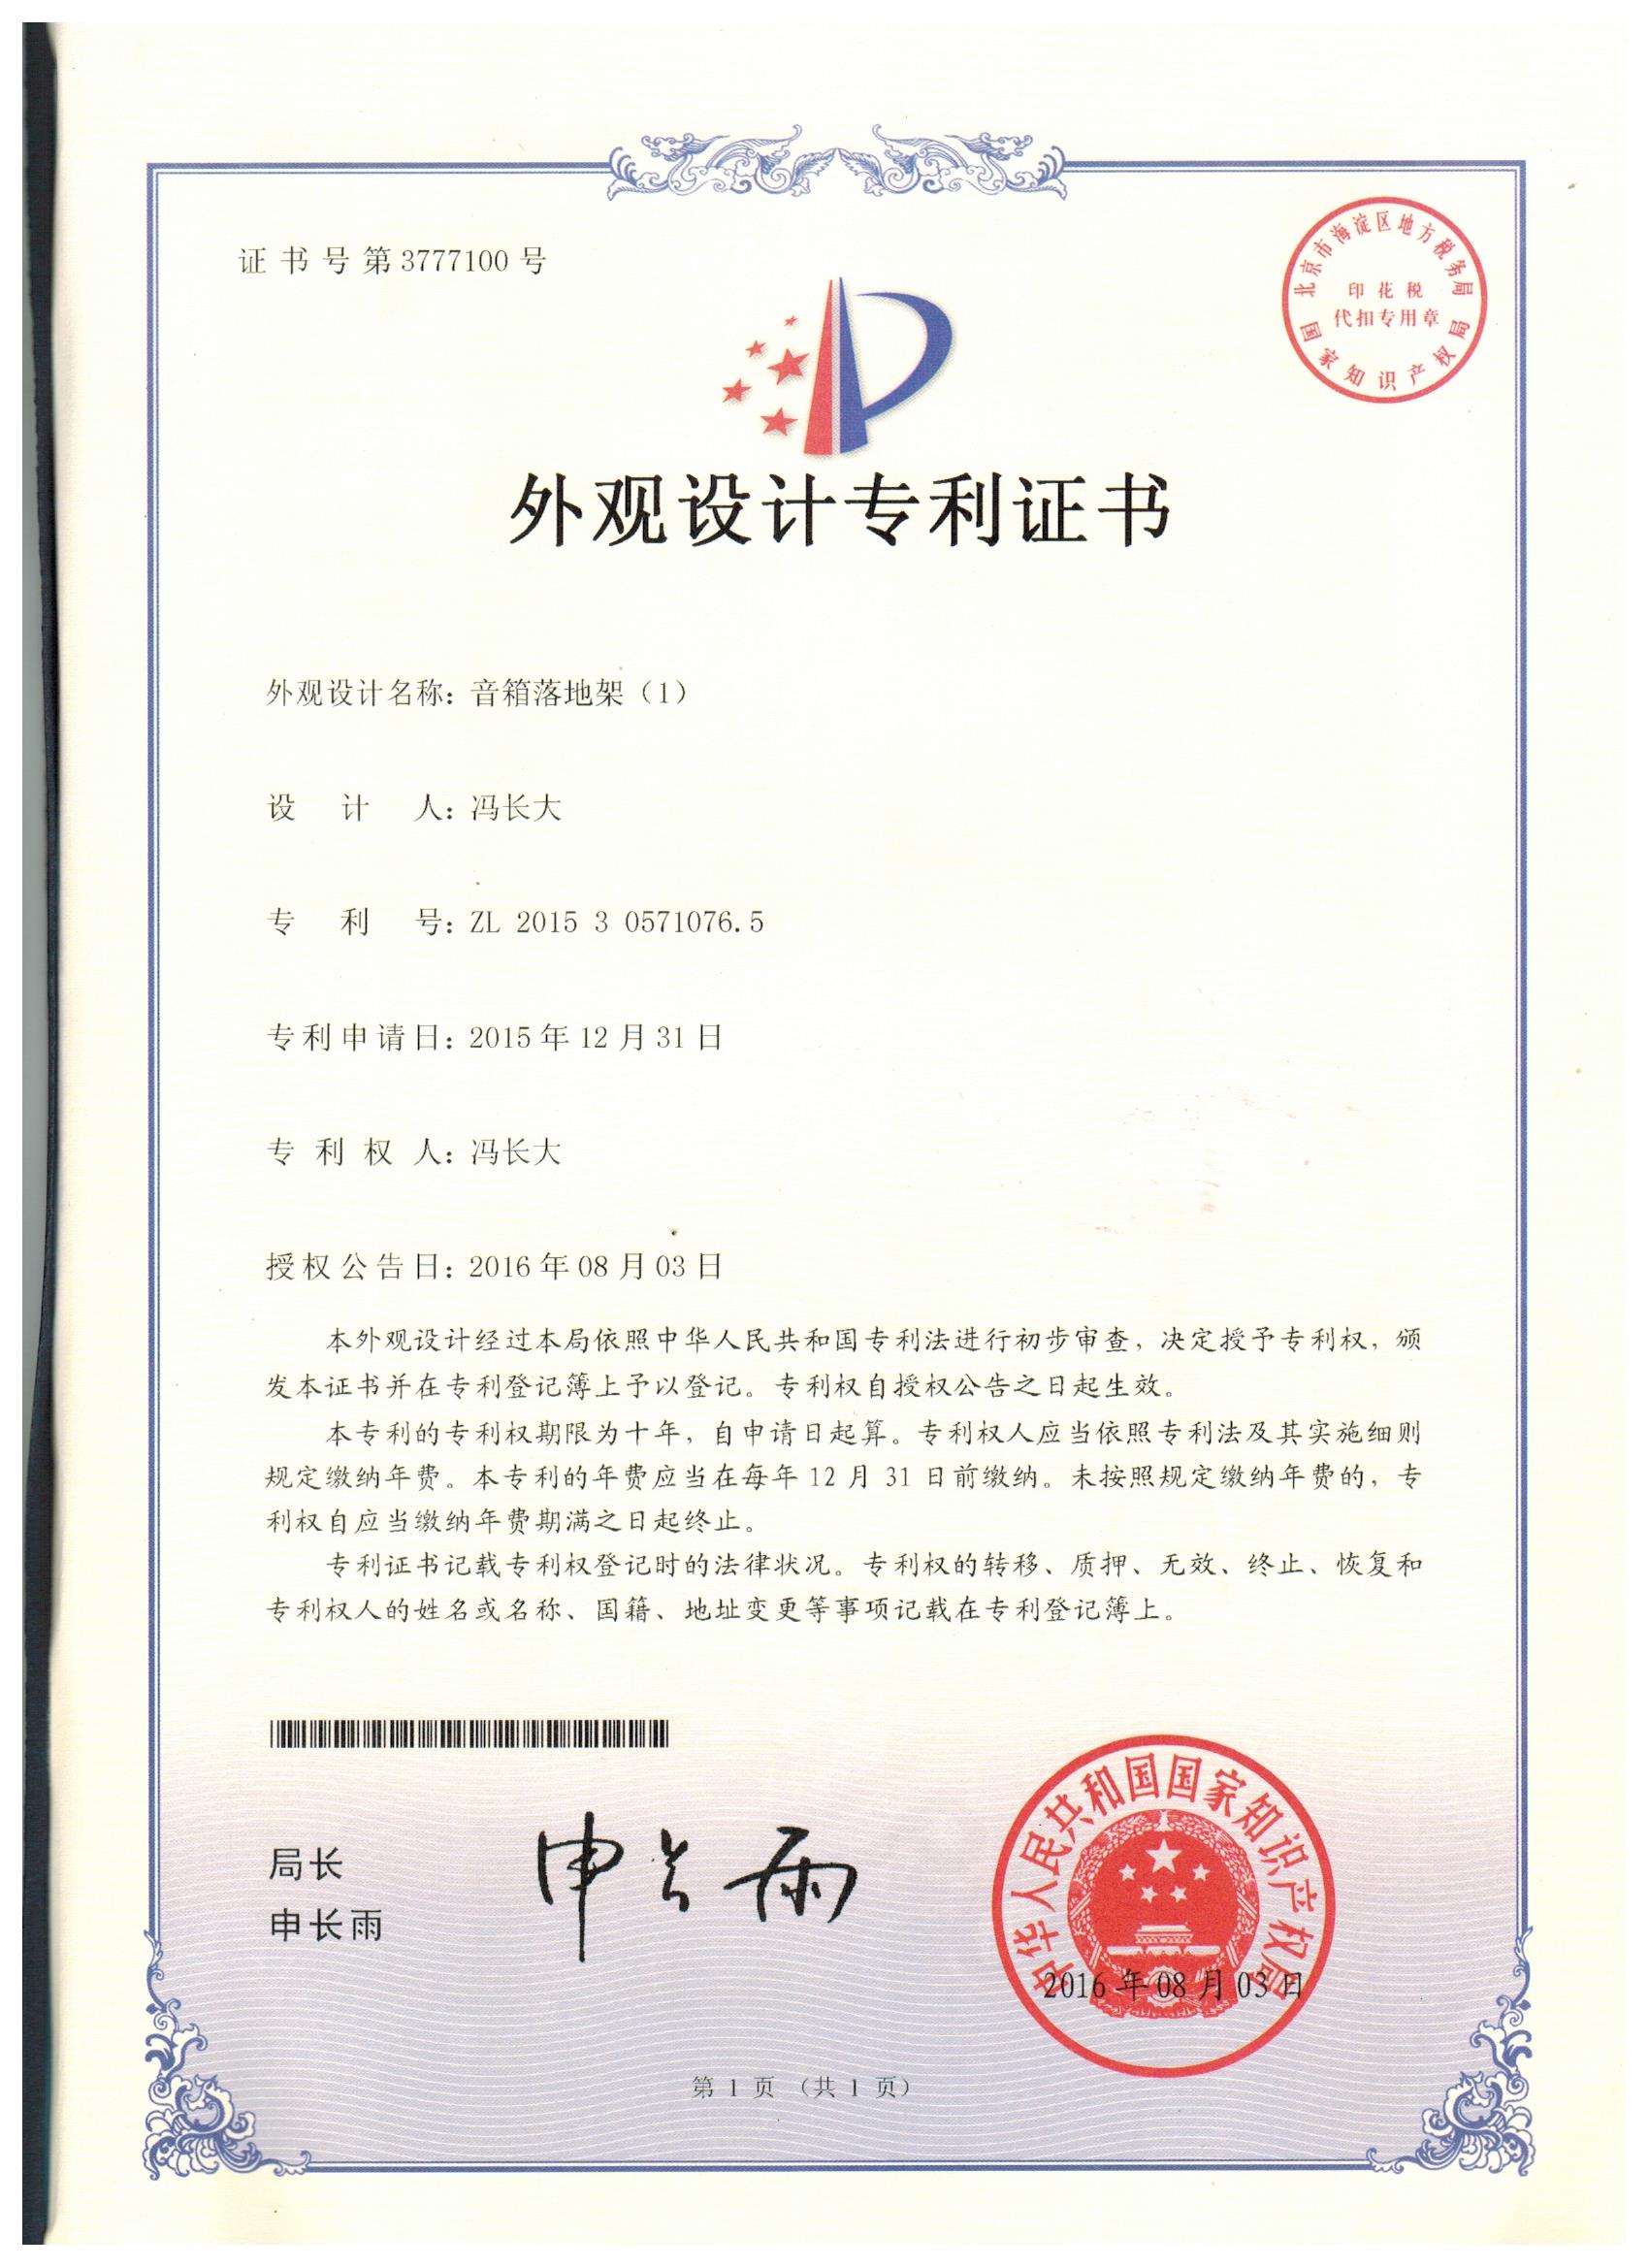 Design Patent Certificate: Speaker Floor Stand (1)